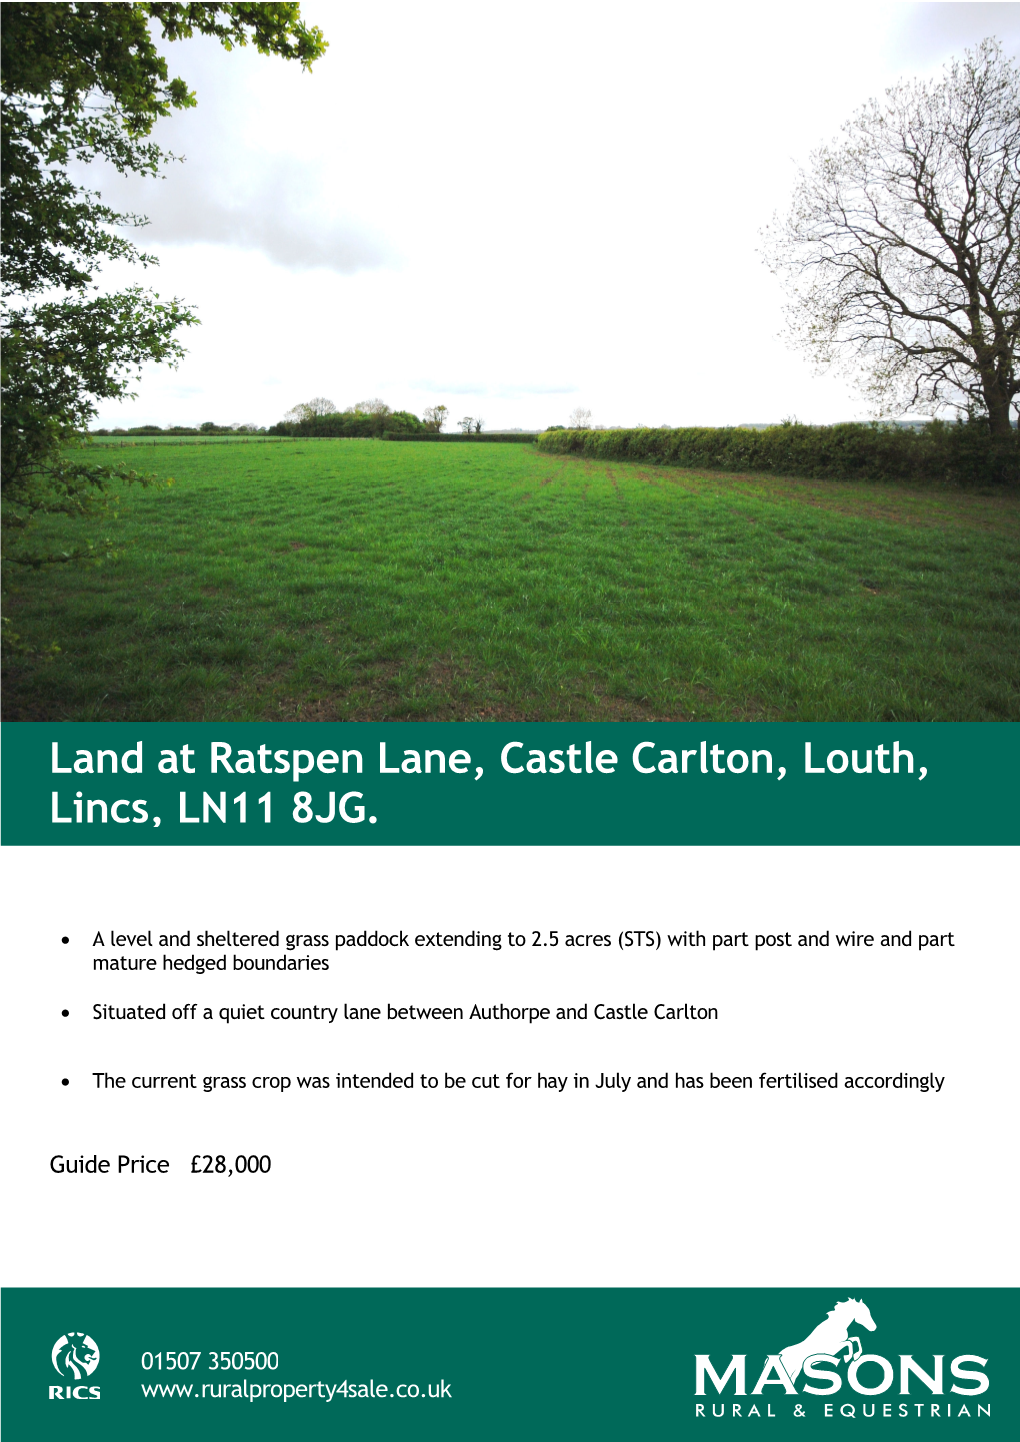 Land at Ratspen Lane, Castle Carlton, Louth, Lincs, LN11 8JG